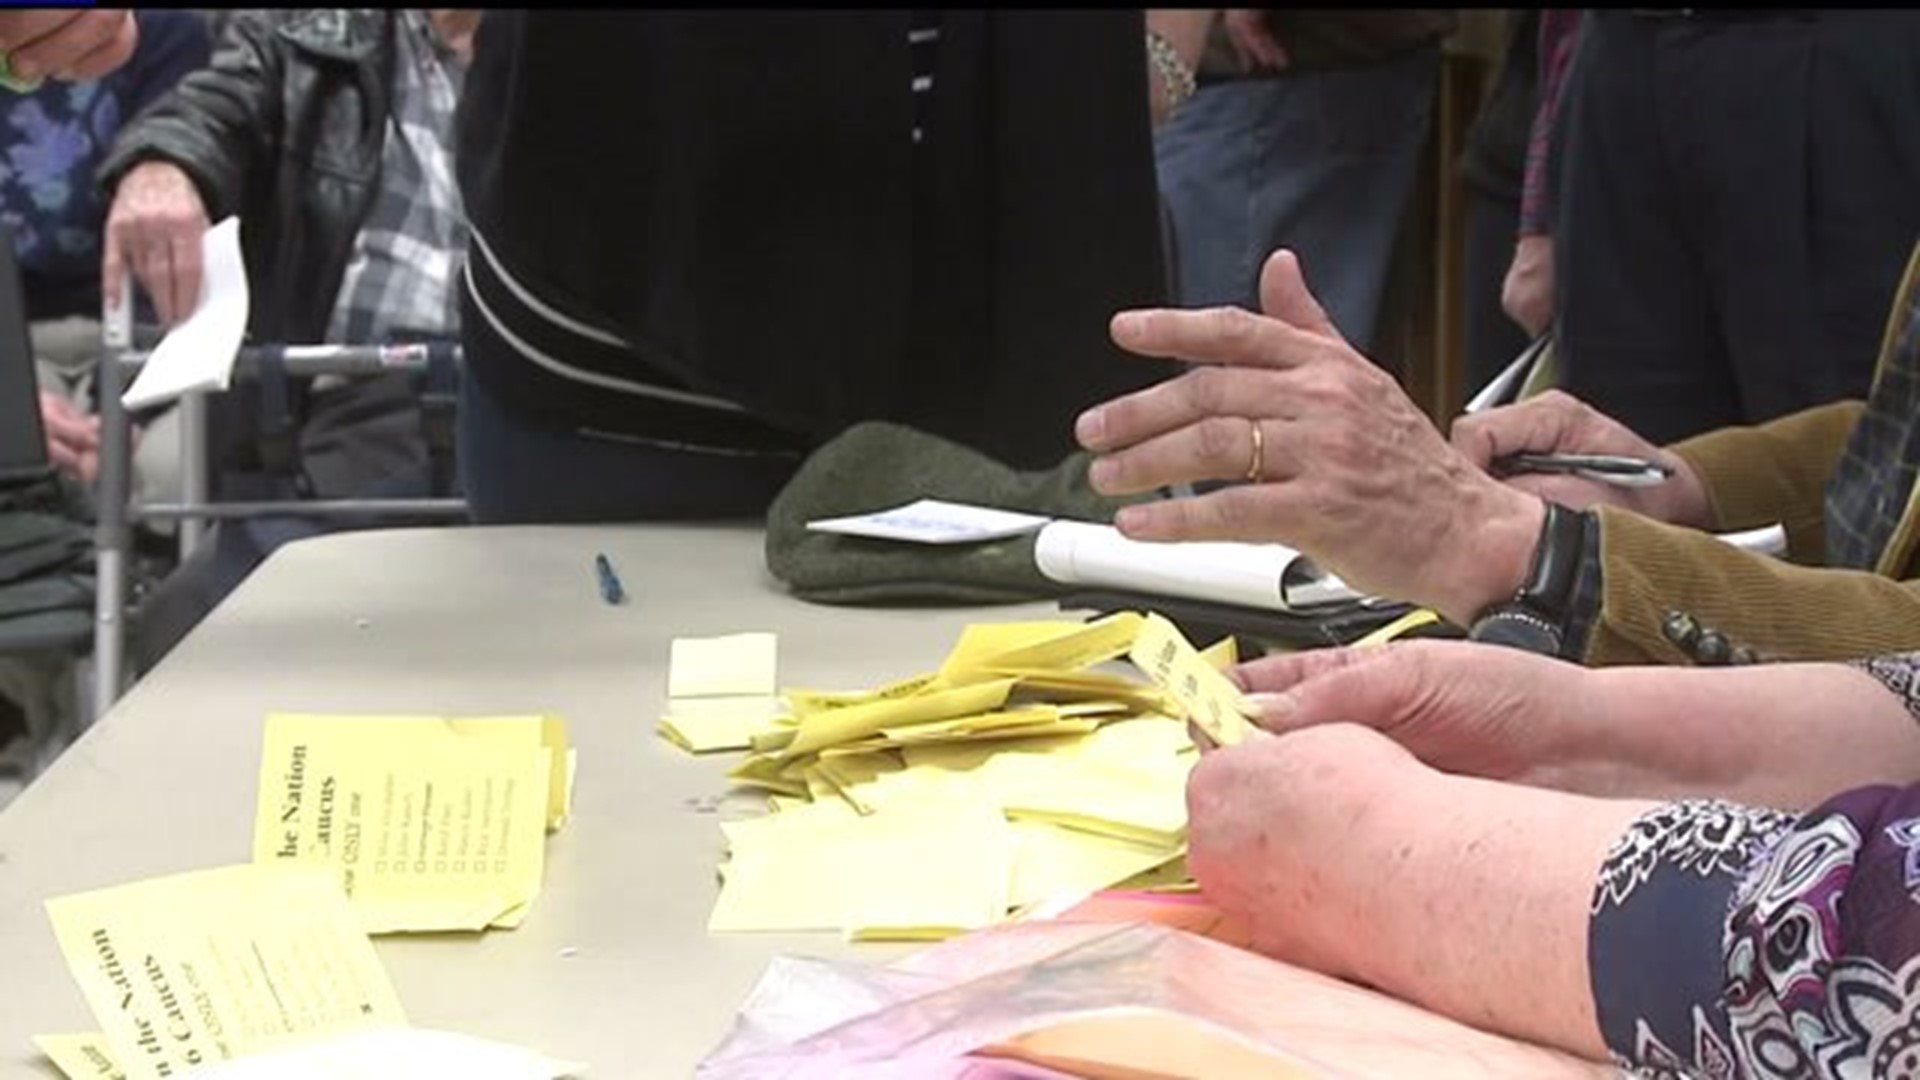 Republican precinct runs out of caucus ballots